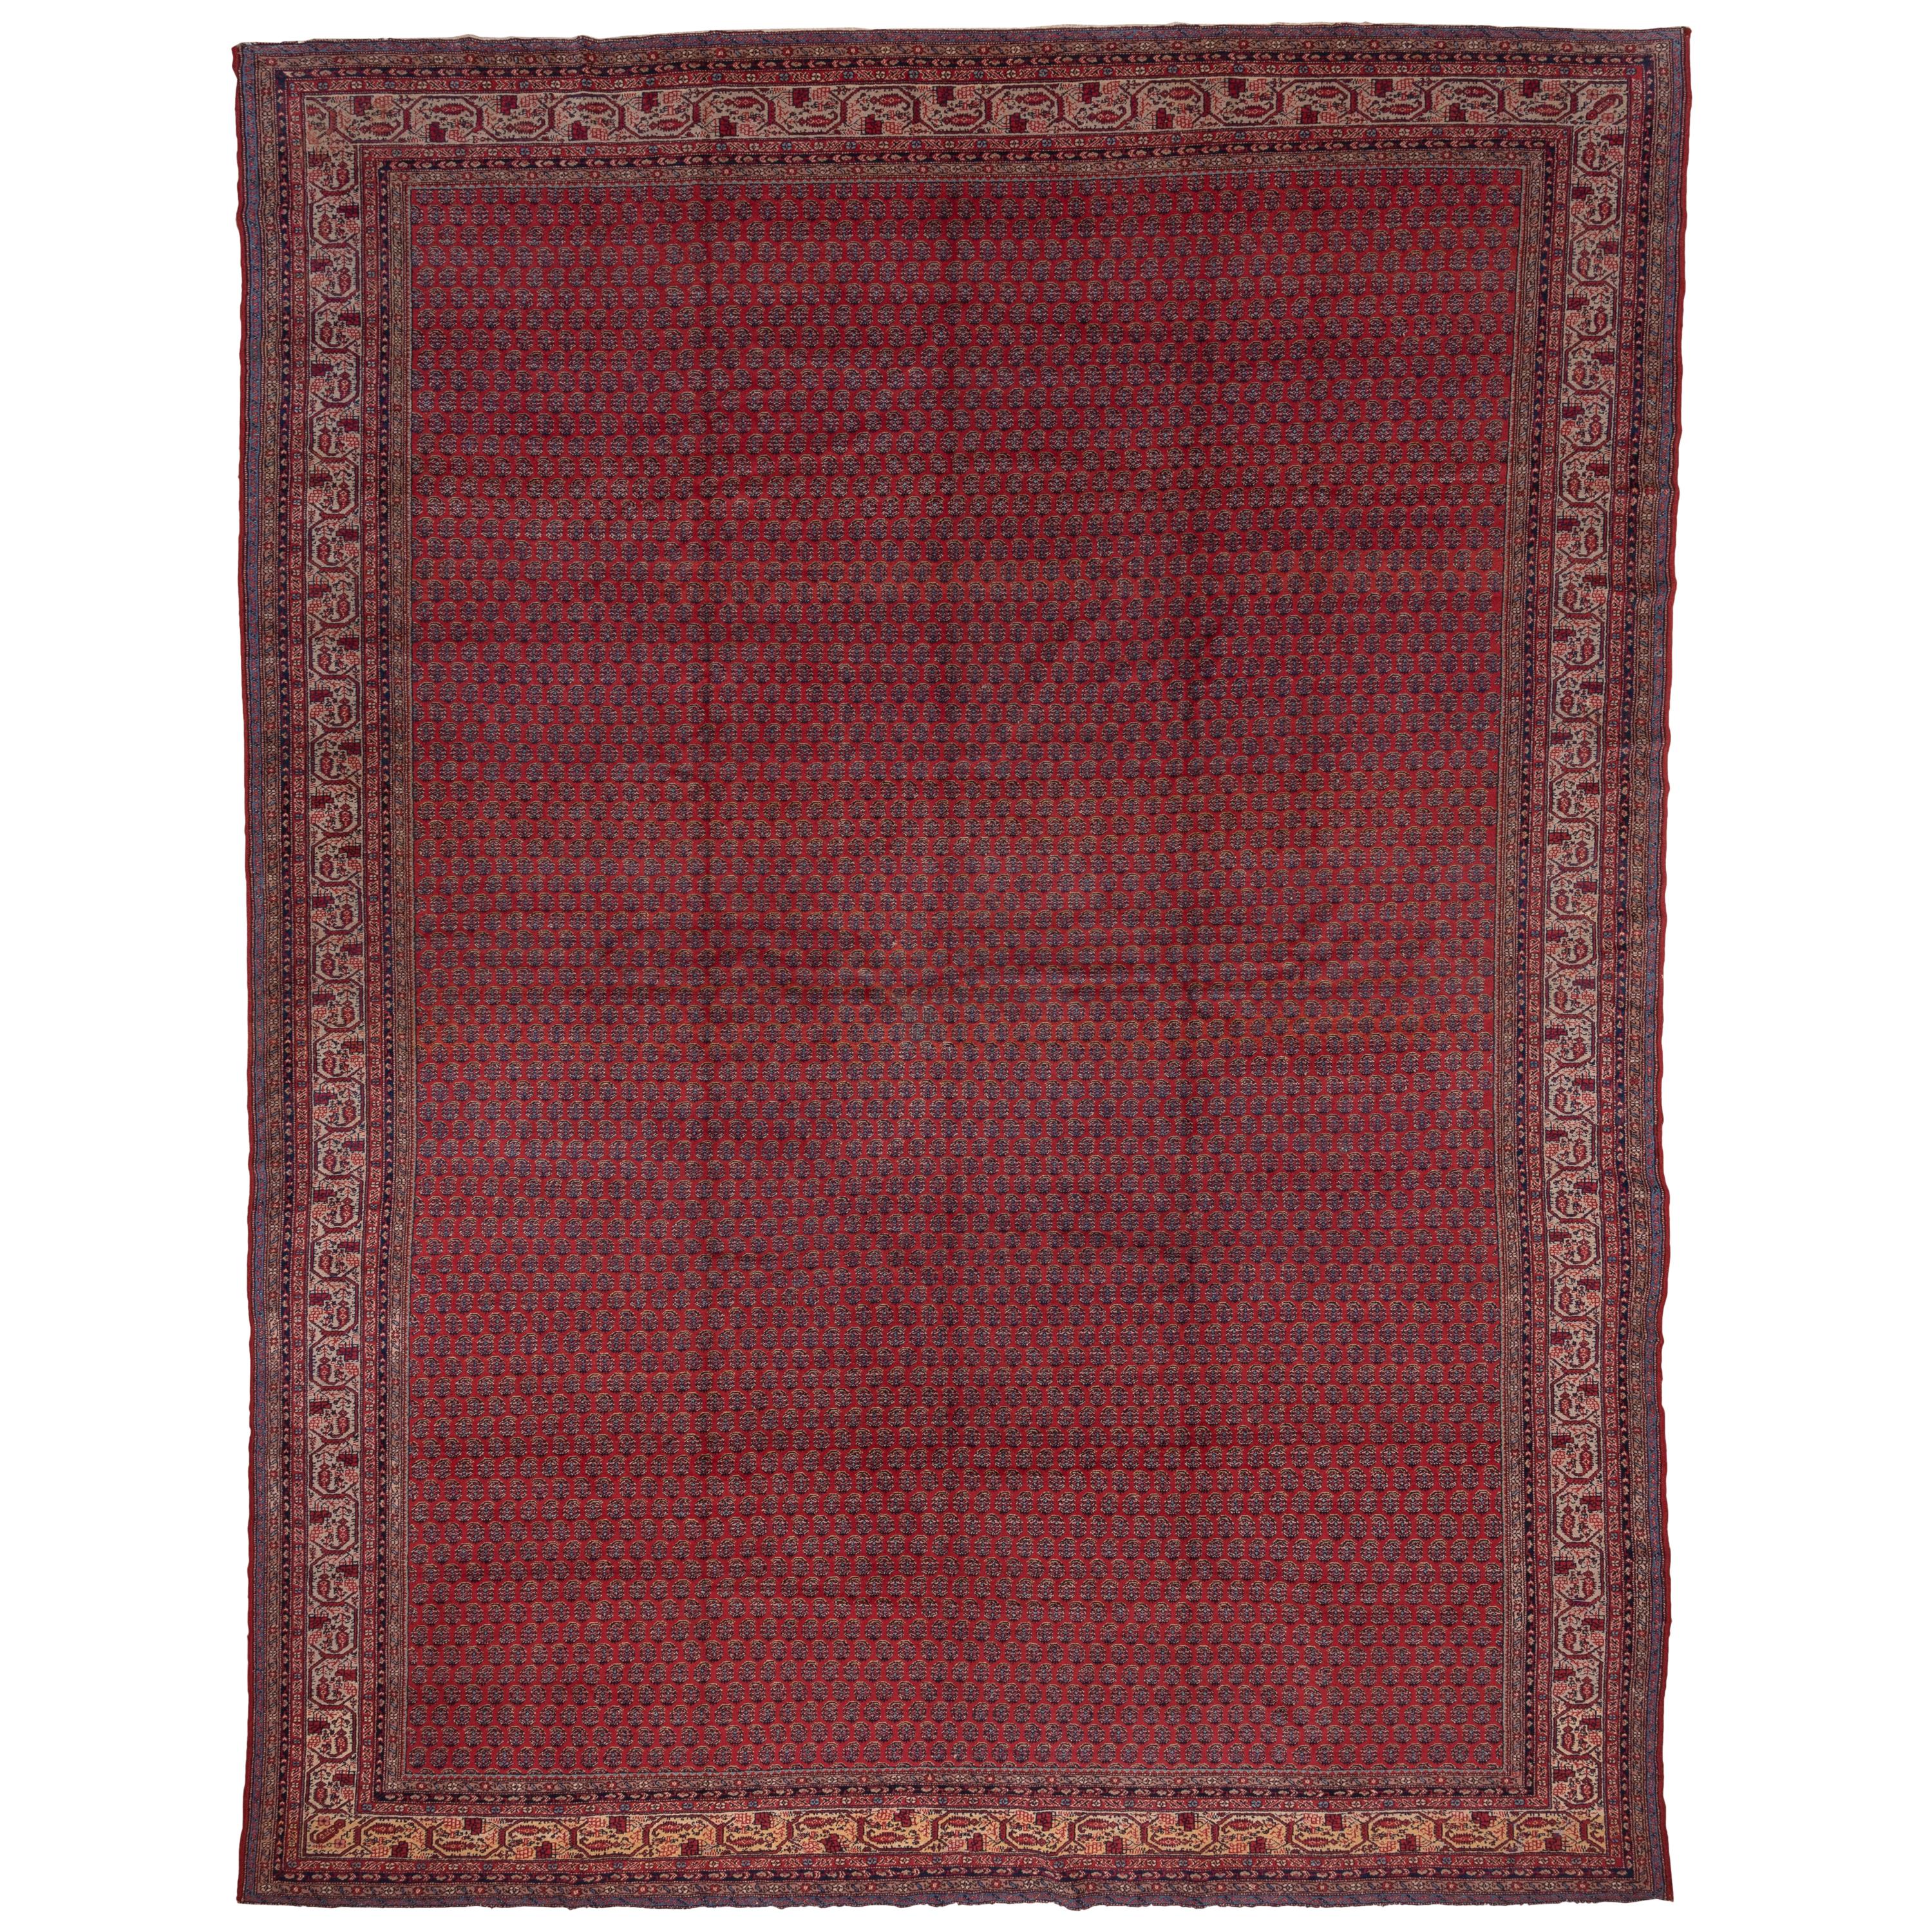 Antique Persian Saraband Carpet, Red Allover Field, Circa 1930s